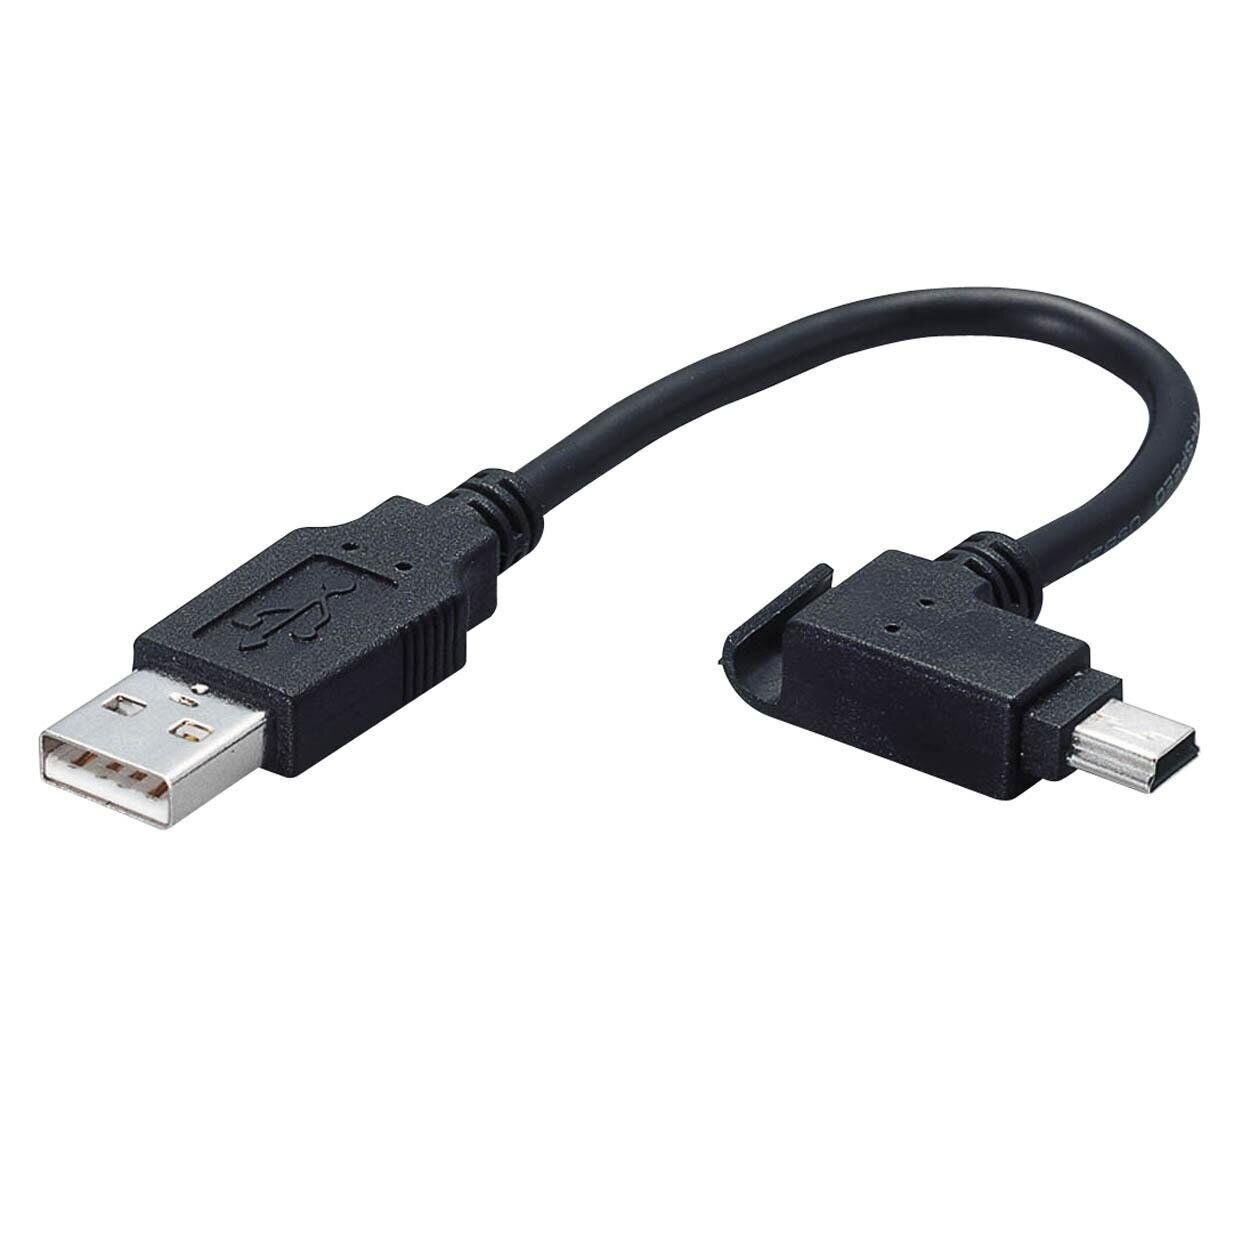 Elecom Mobile Usb Cable A Male To Minib Male 0.1M To Mbm5 Hover USB-MBM5